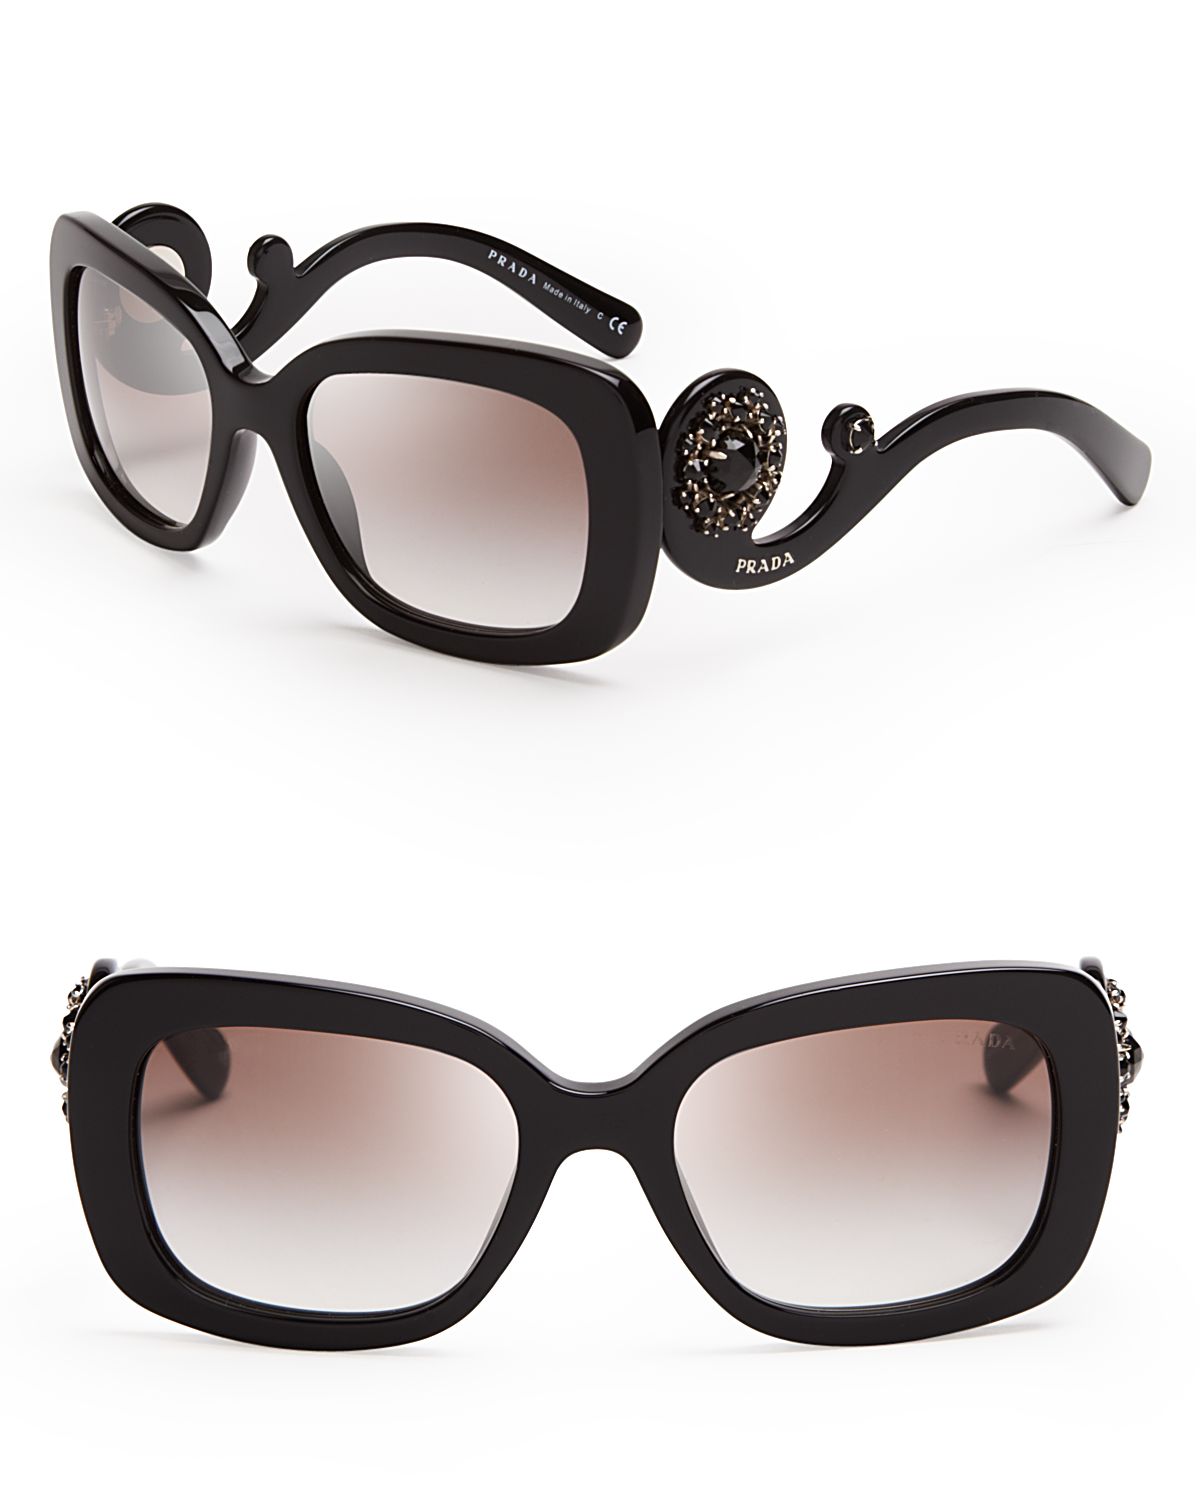 Prada Absolute Baroque Crystal Square Sunglasses in Black/Black (Black) -  Lyst